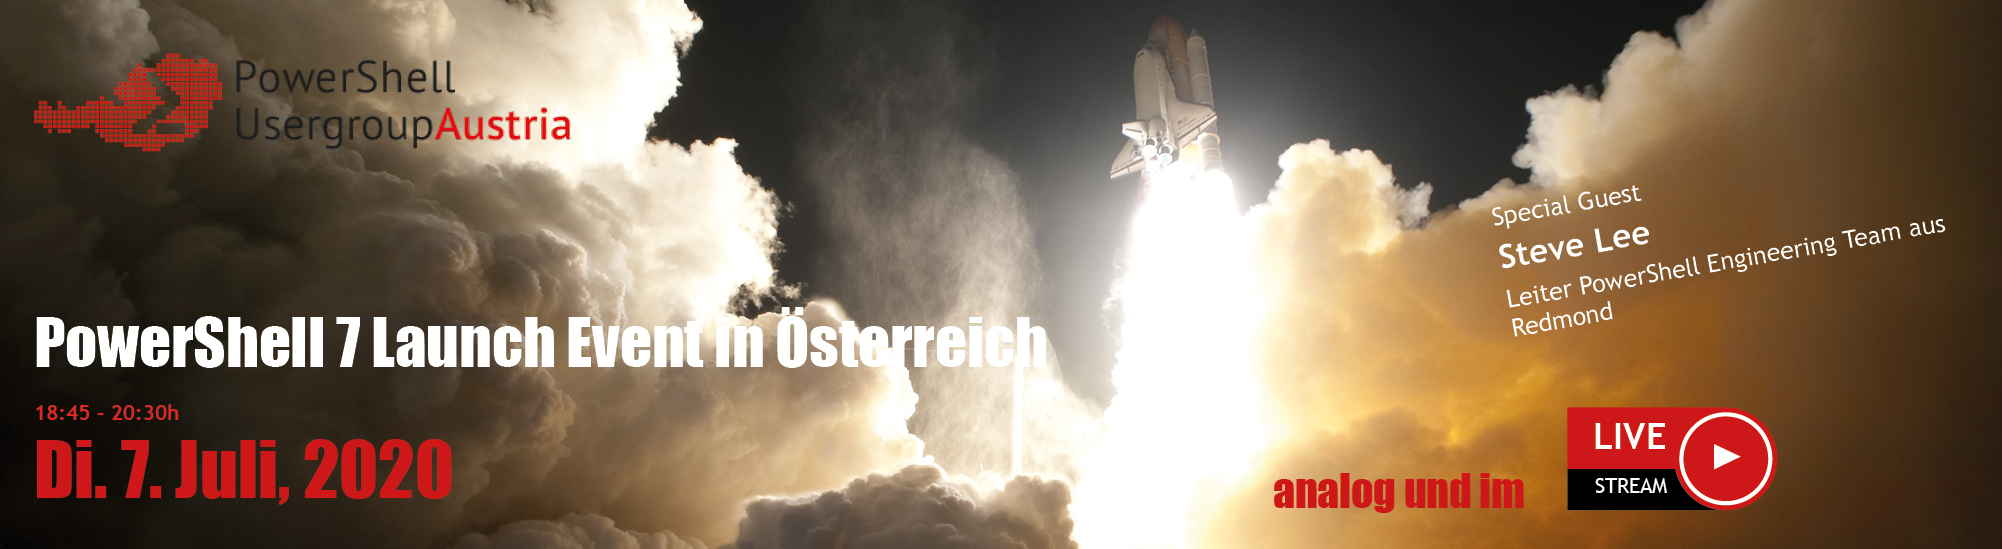 PowerShell 7 Launch Event - Austria